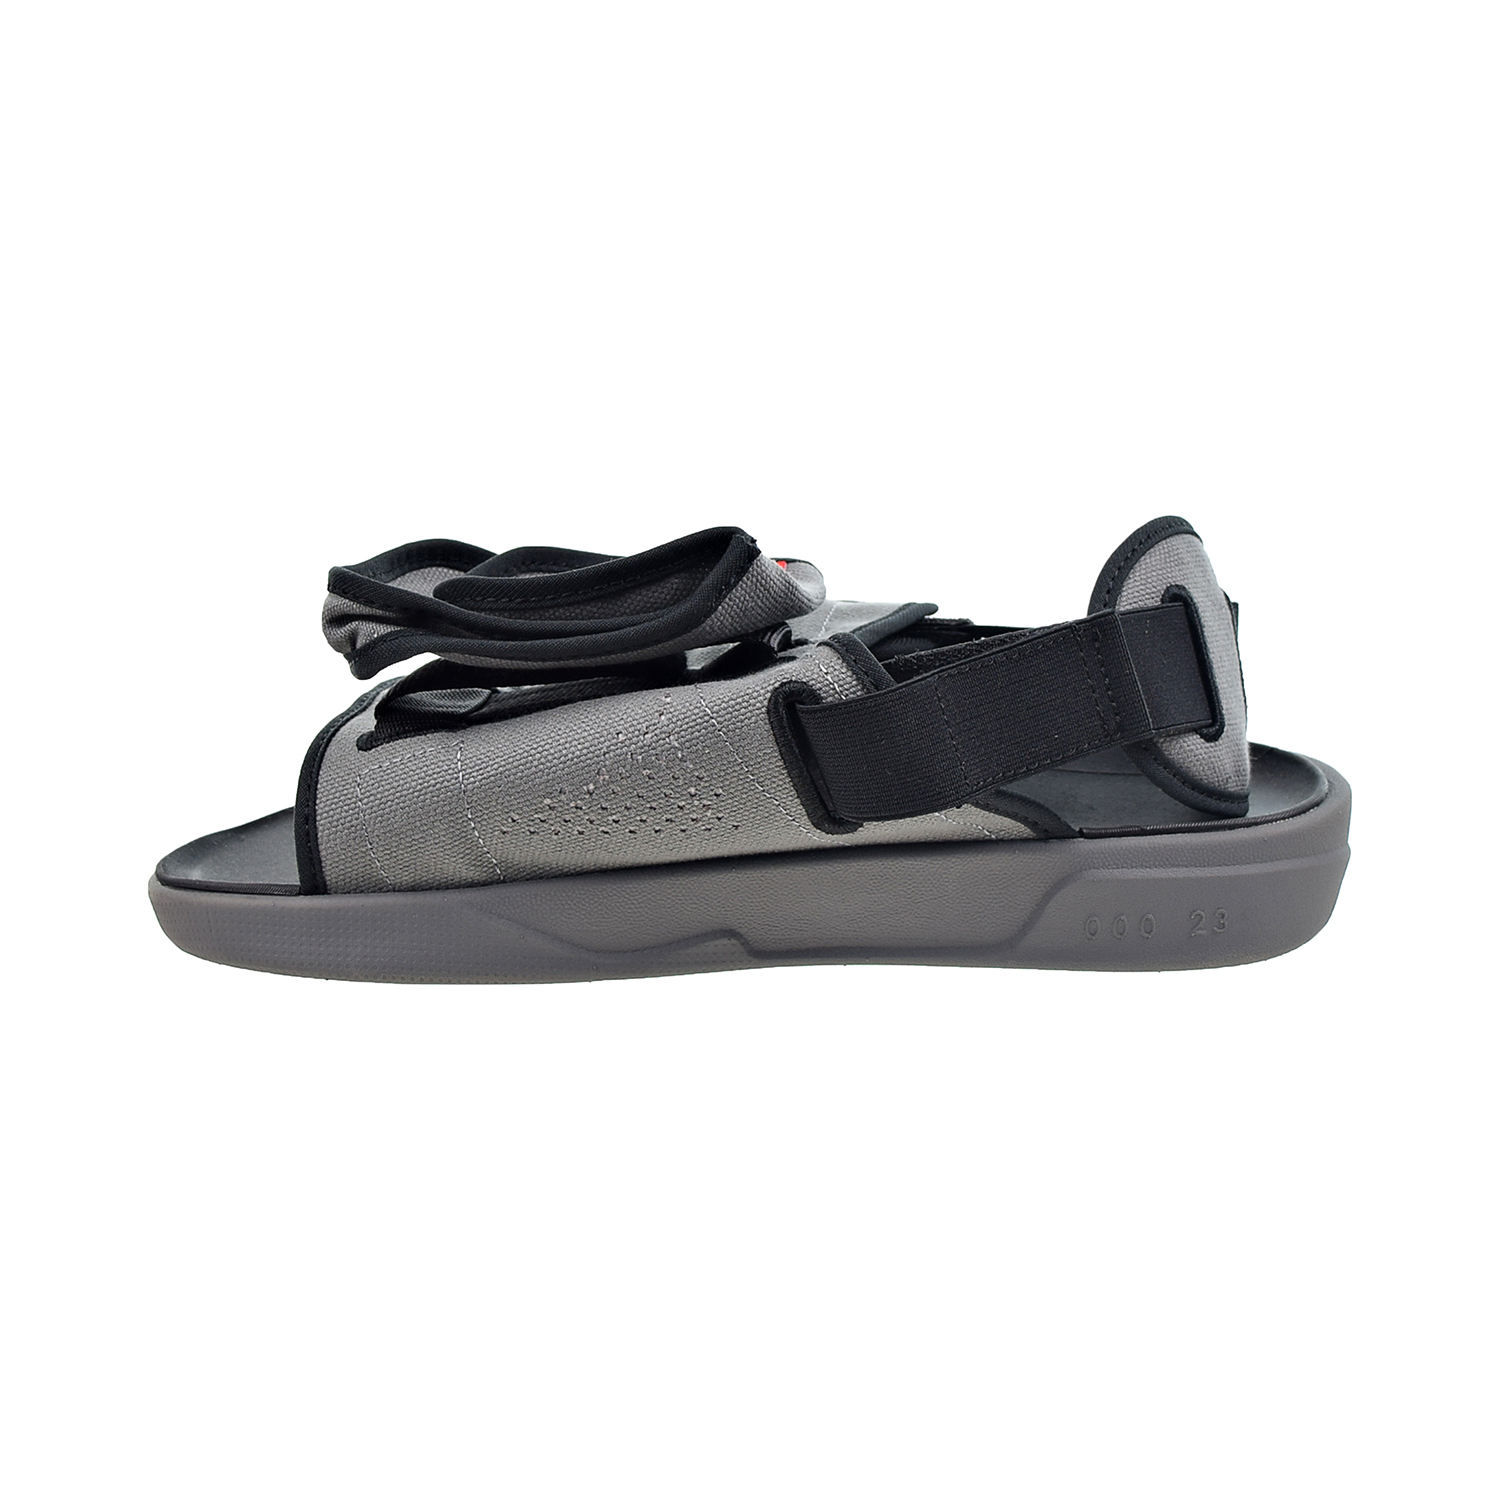 Michael Jordan Jordan LS Men's Slide Sandals Smoke Grey-University Red cz0791-001